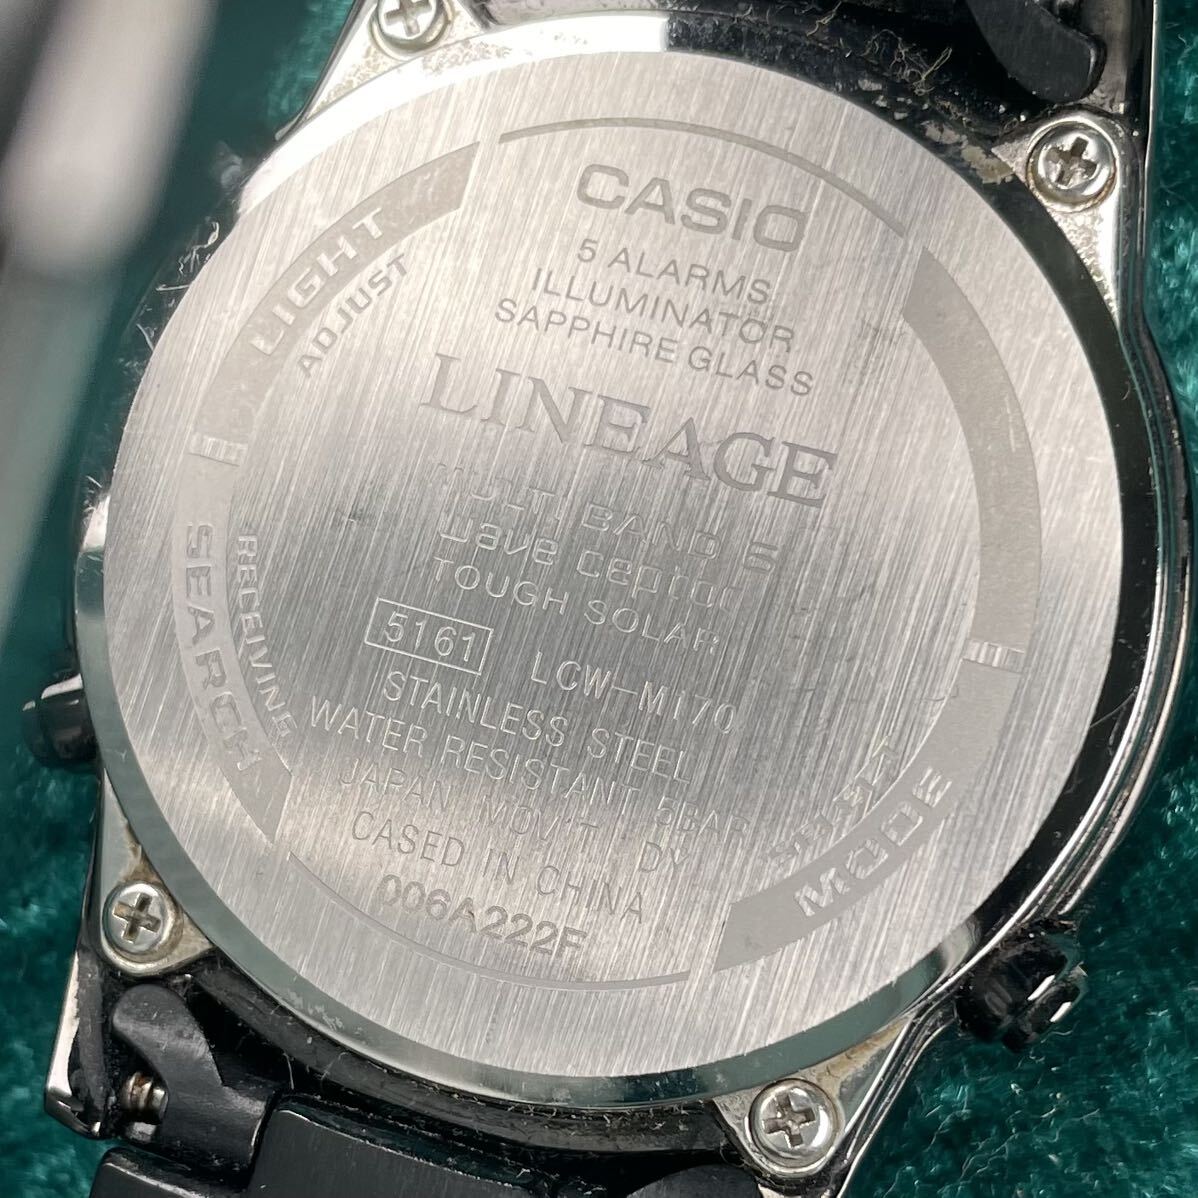 26 CASIO カシオ LINEAGE wave ceptor TOUGH SOLAR LCW-M170 ウェブセプター ガラス綺麗 オリジナルブレス 綺麗_画像2